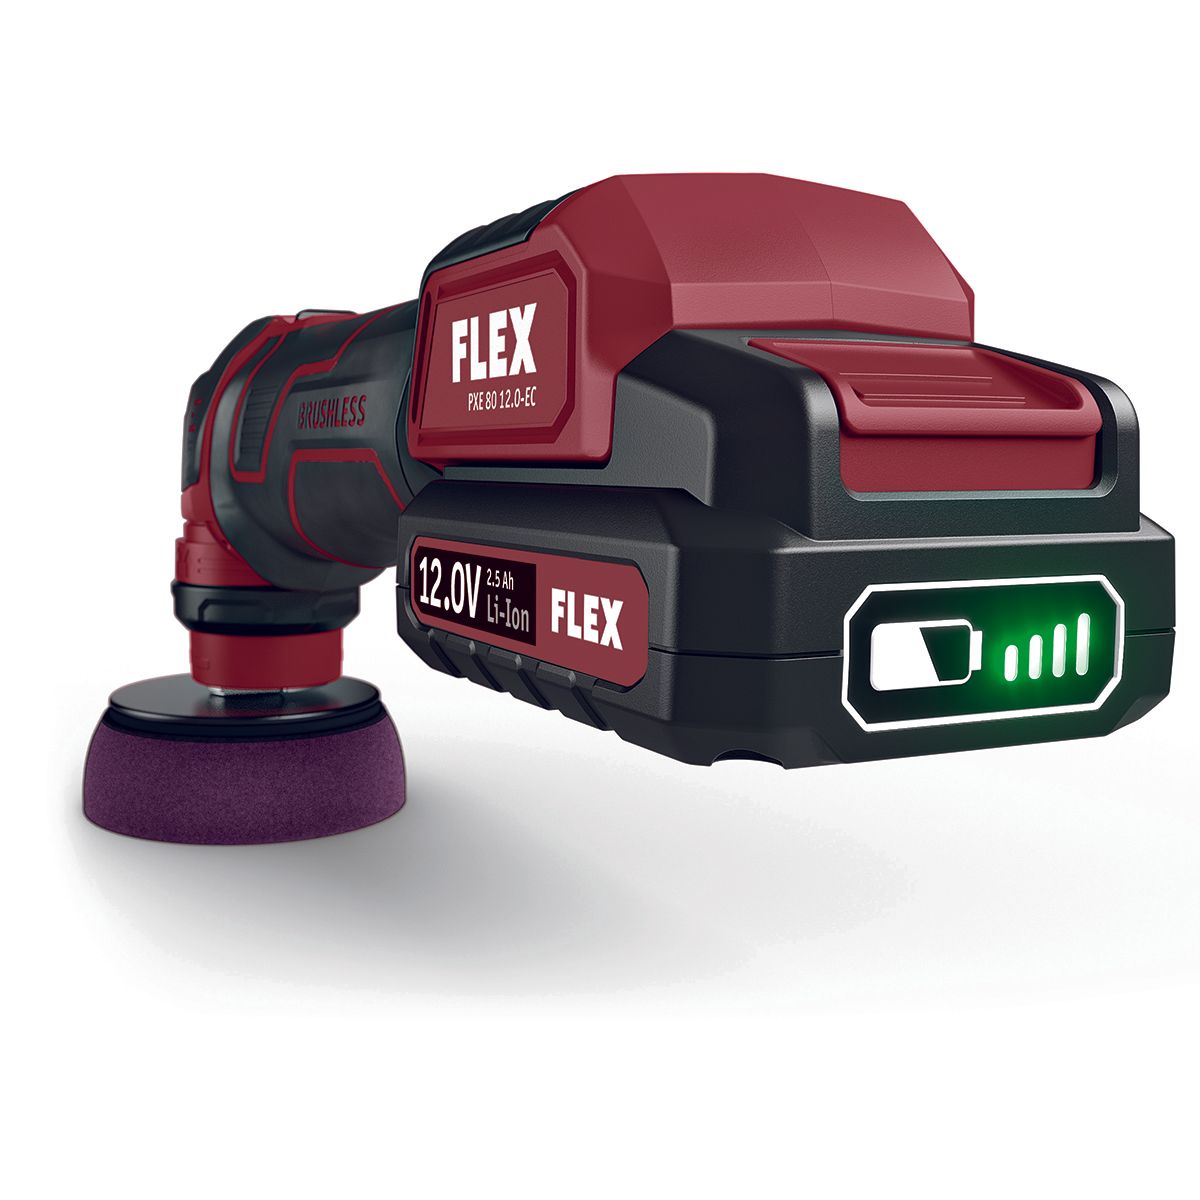 Flex PXE 80 12V Kit - Mini Polisseuse à Batterie